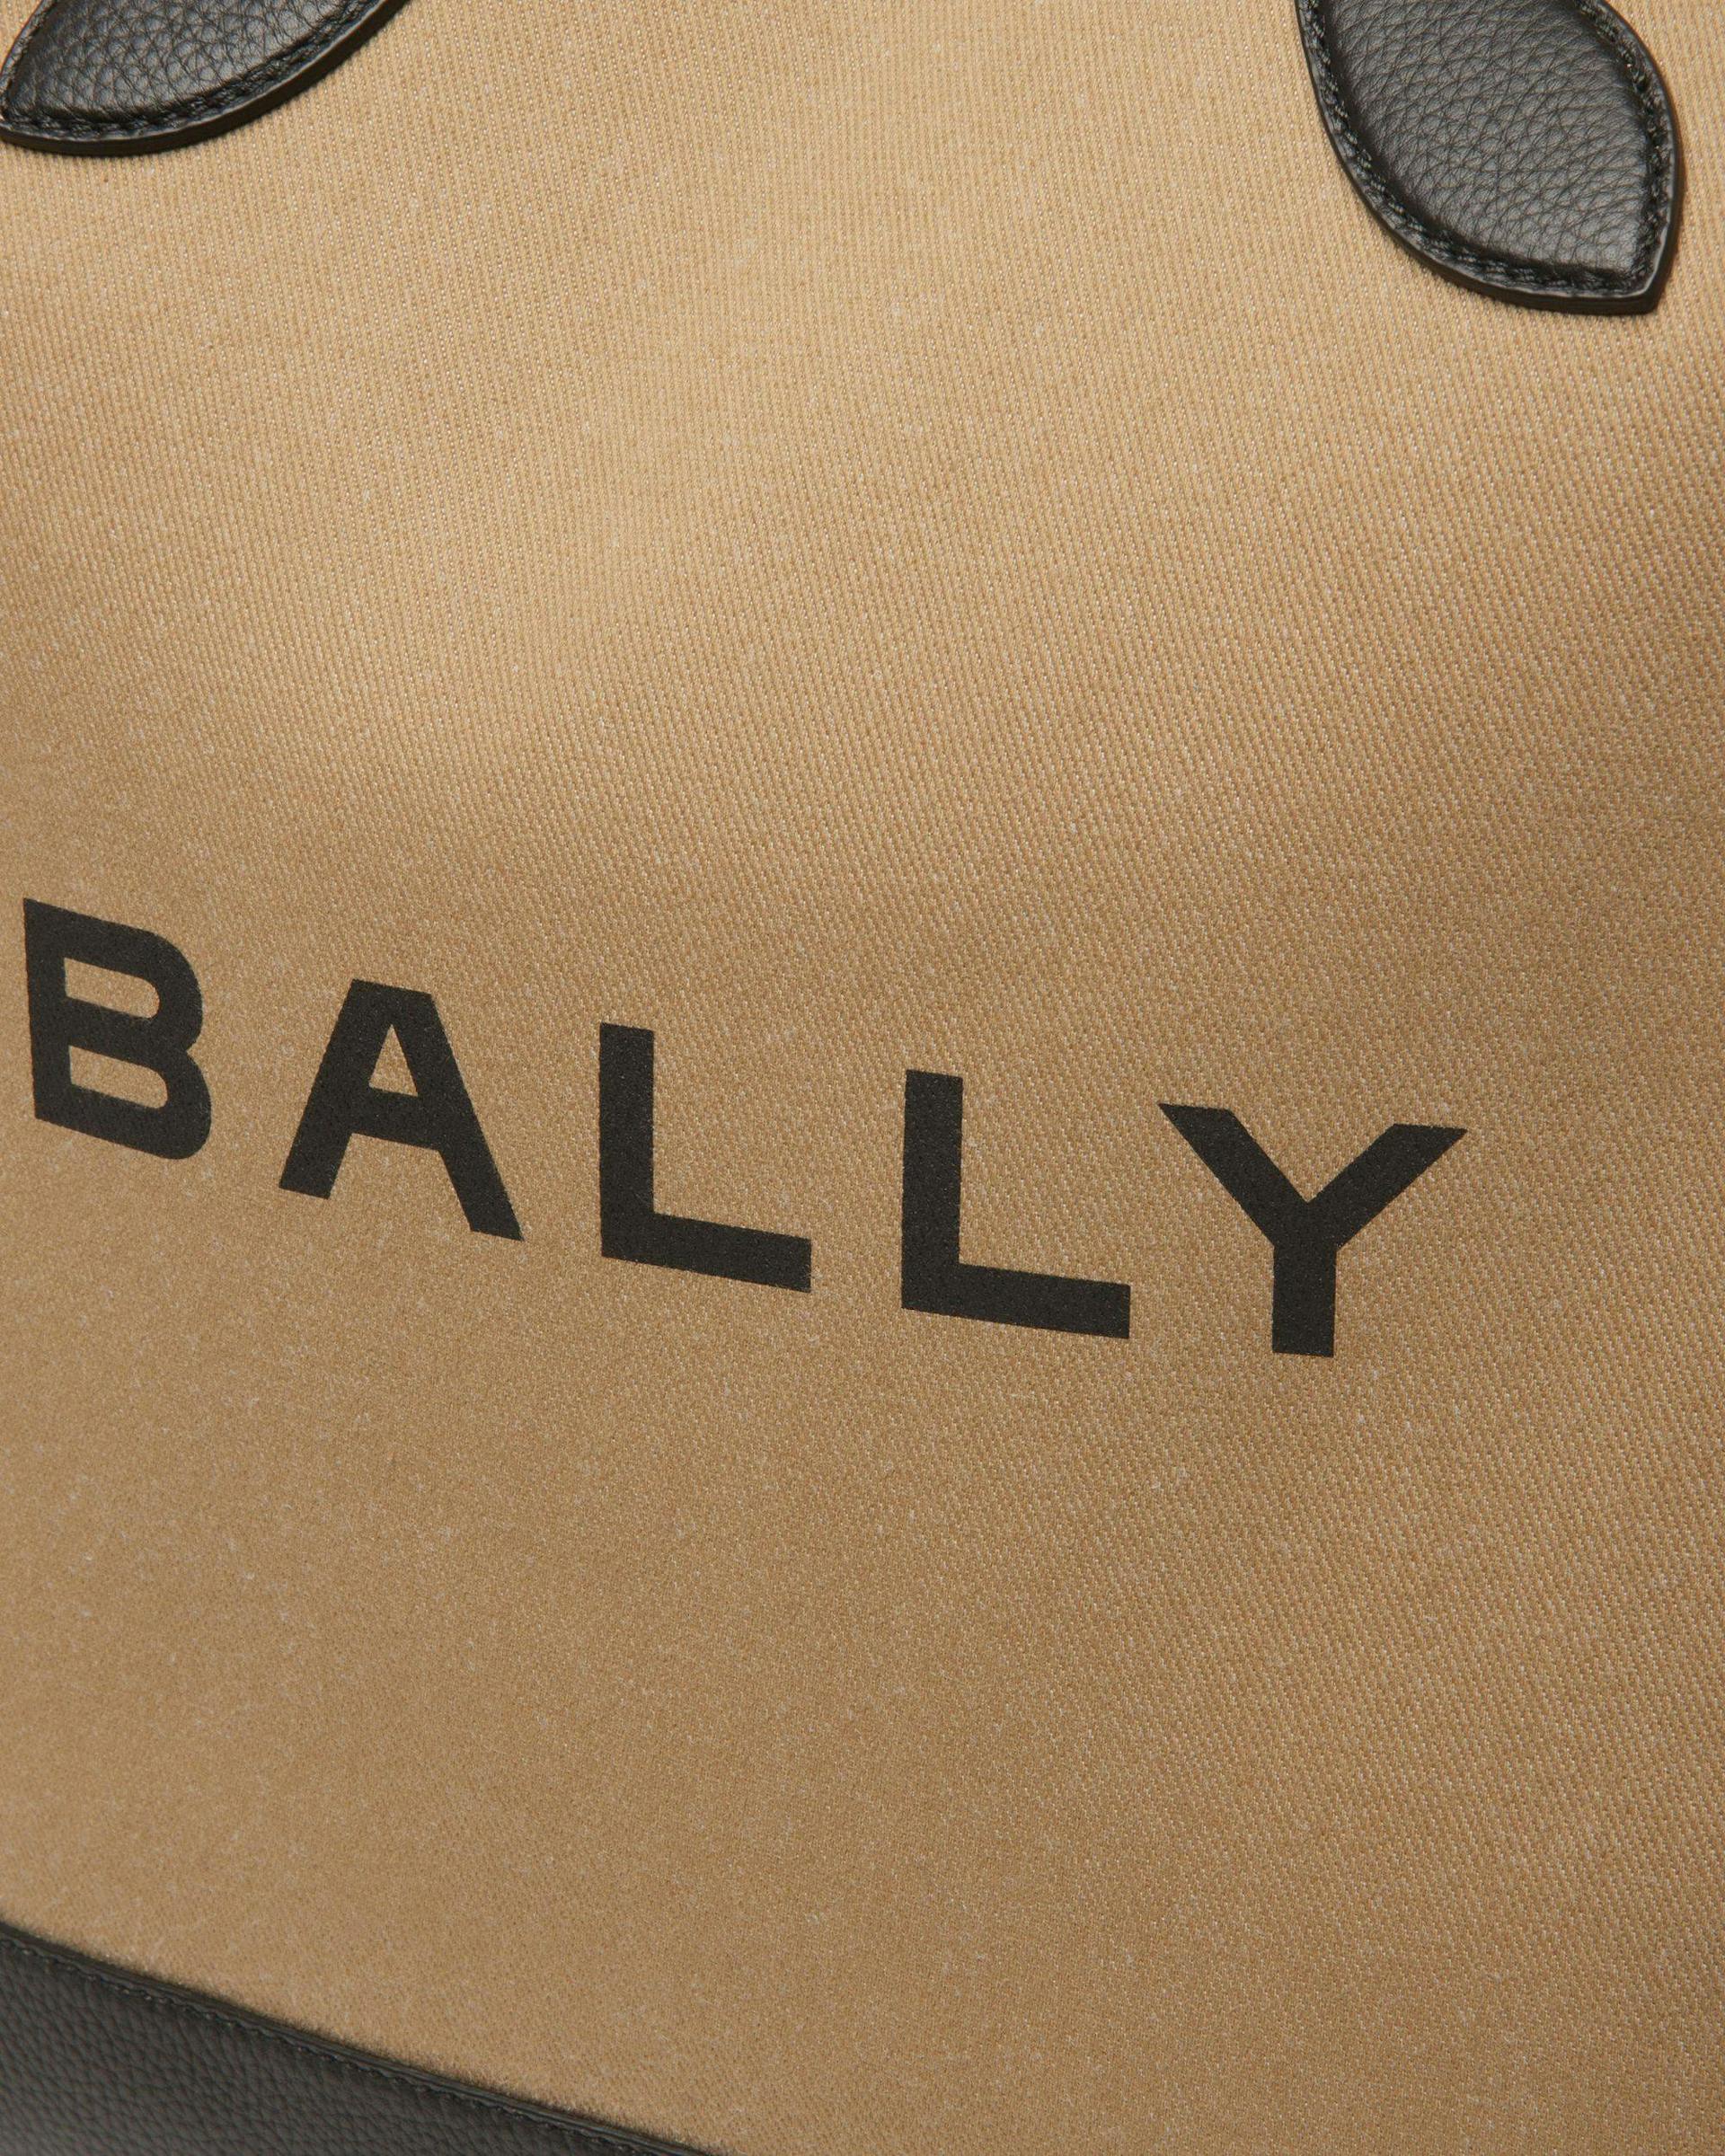 Bar トートバッグ サンド＆ブラック ファブリック - 女性 - Bally - 06